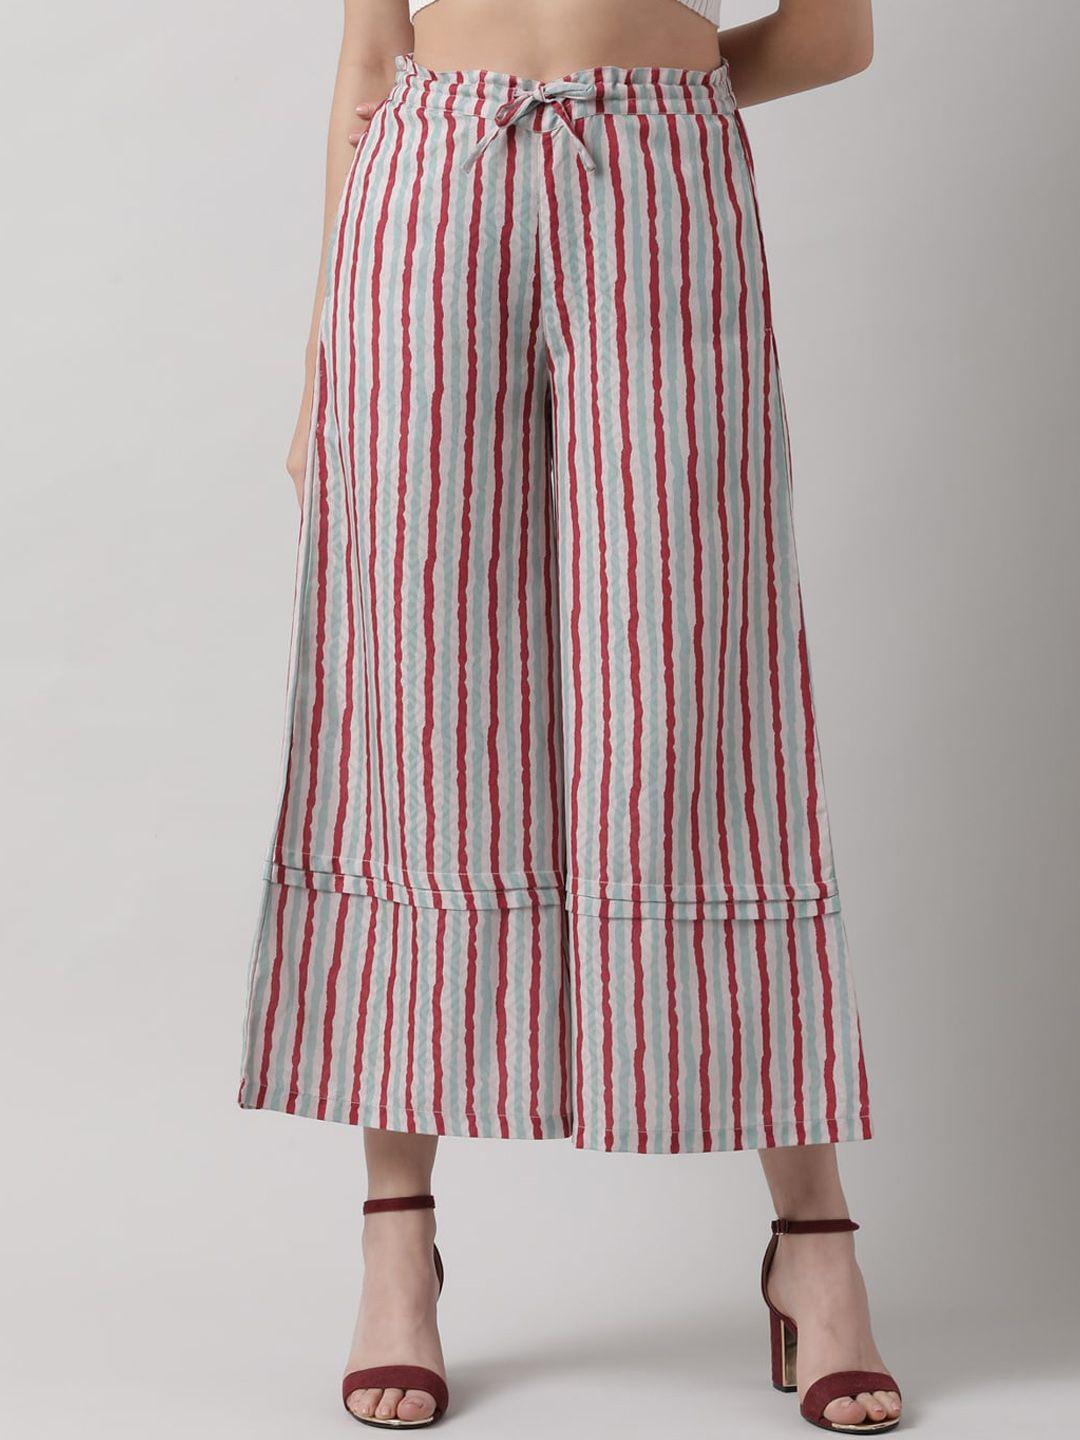 saaki women beige & red striped flared culottes trousers